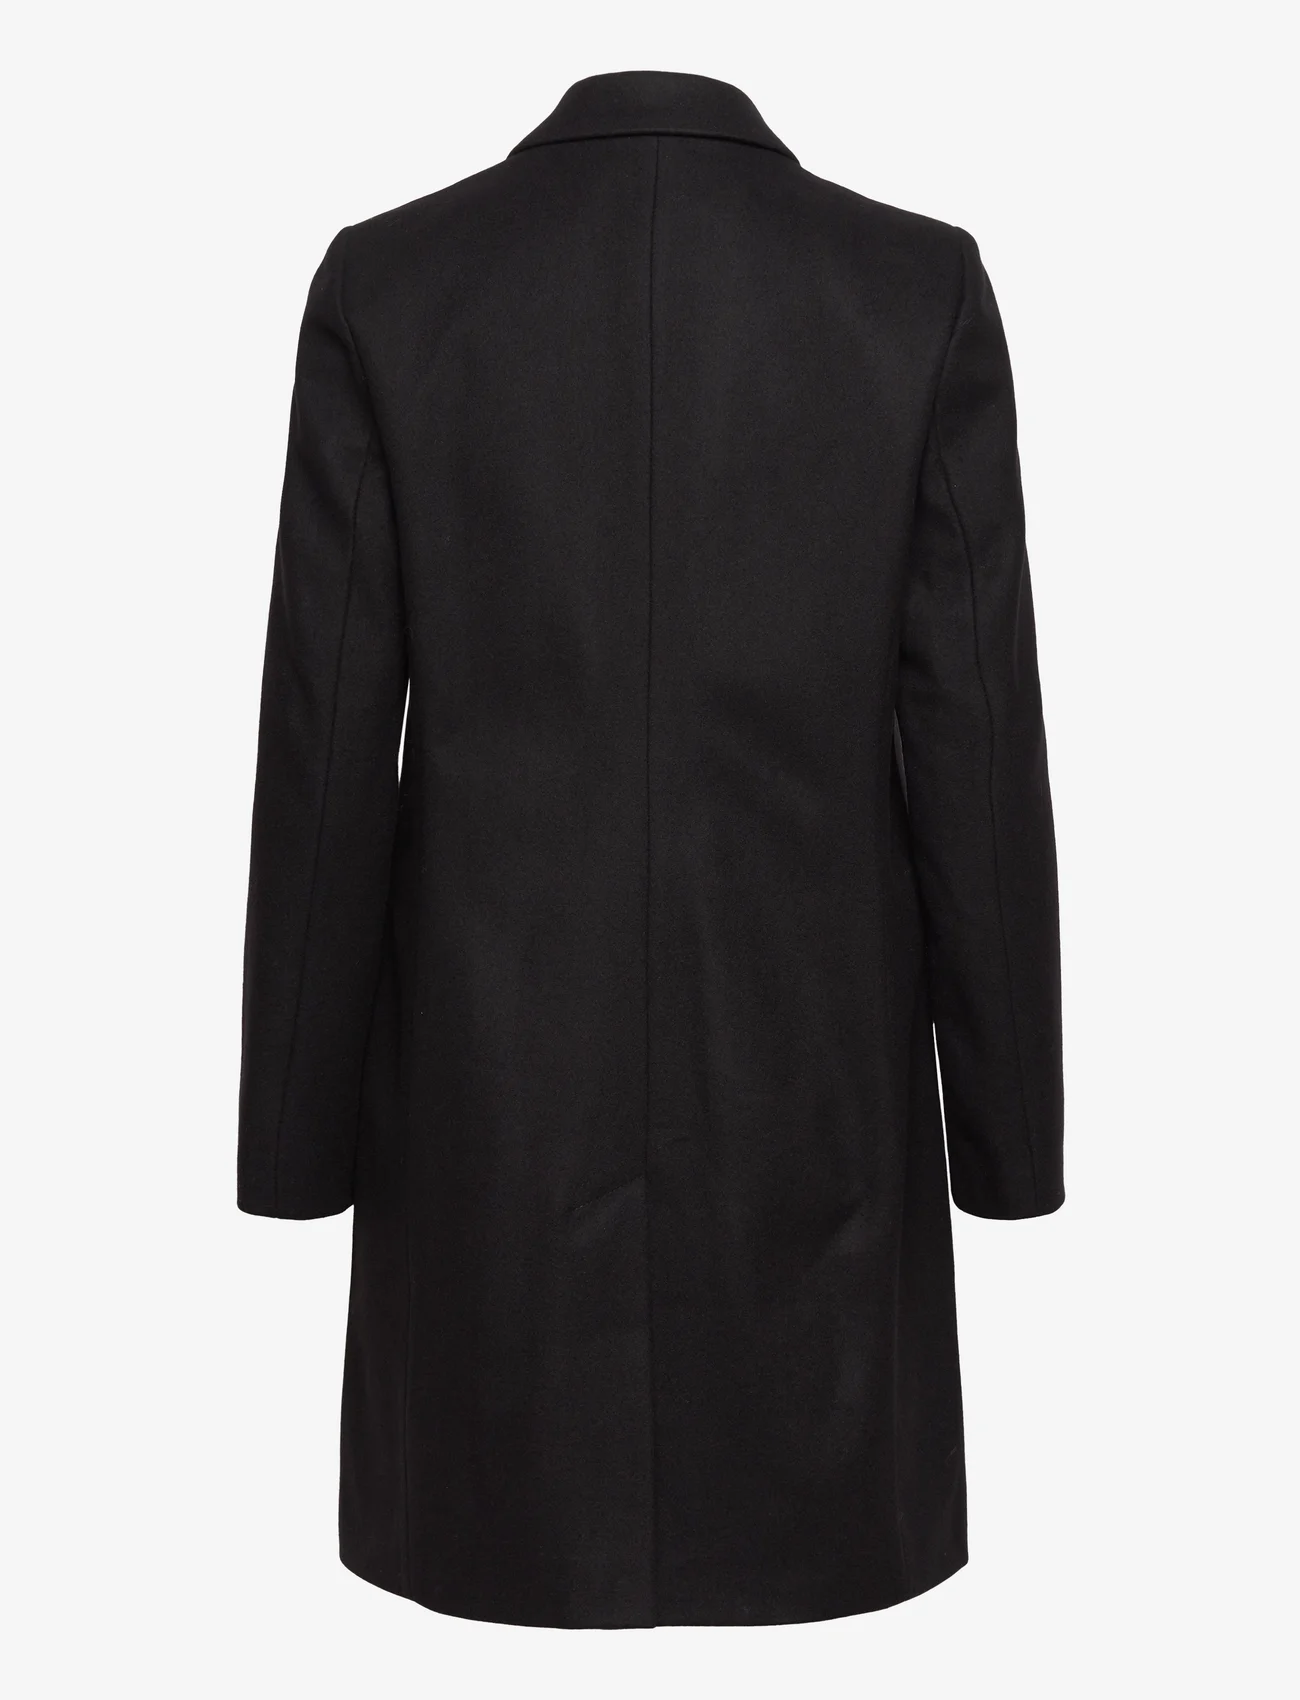 French Connection - FT PLATFM FELT SMART COAT - winter coats - black - 1